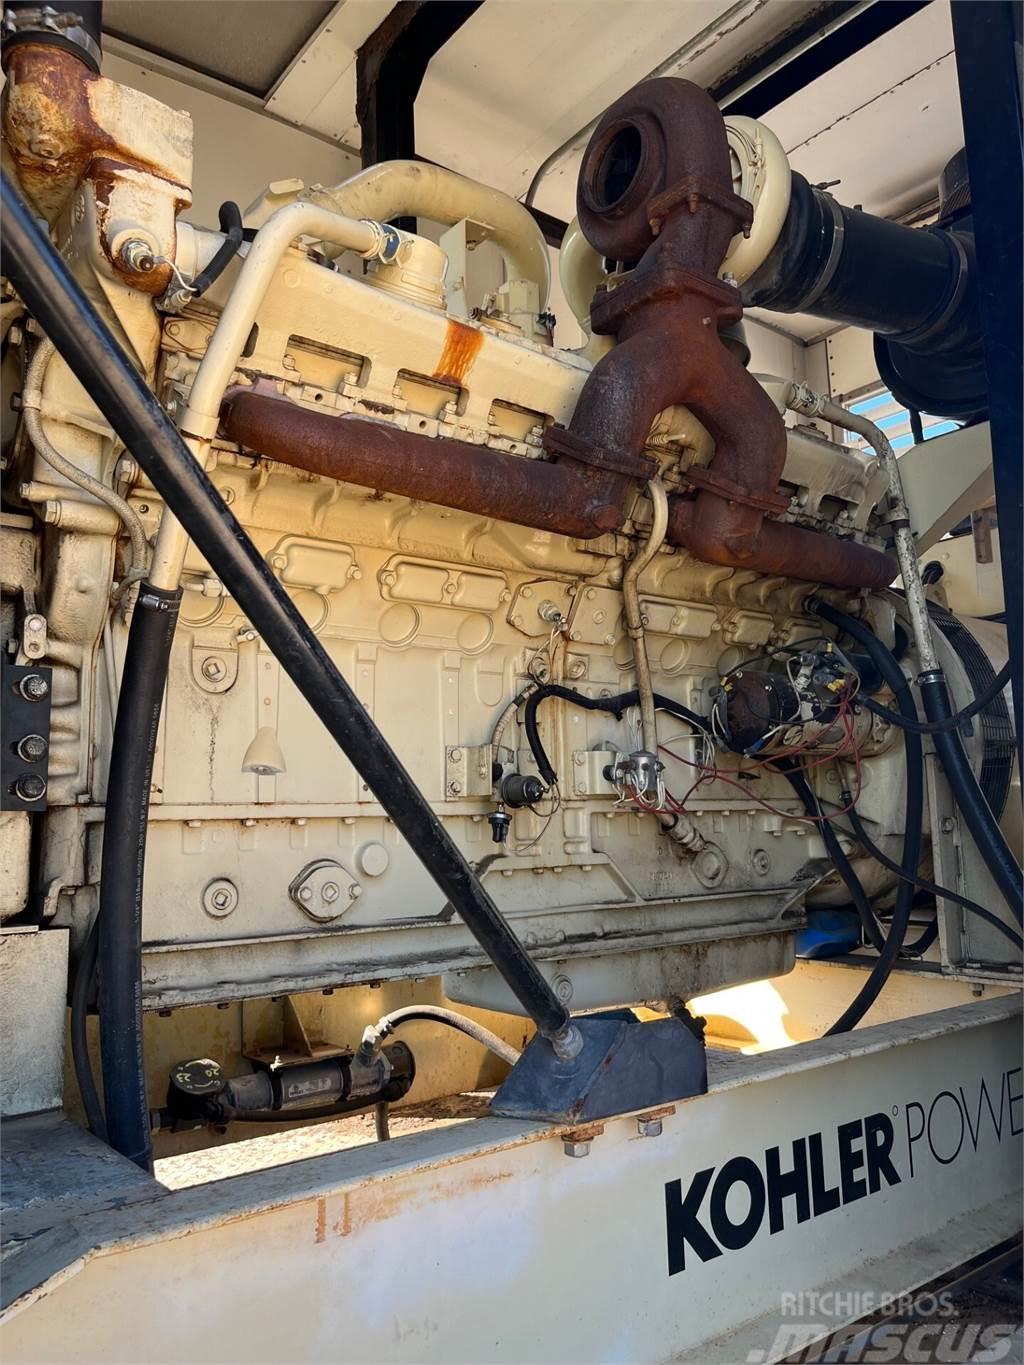 Kohler 750kW Dizel generatori